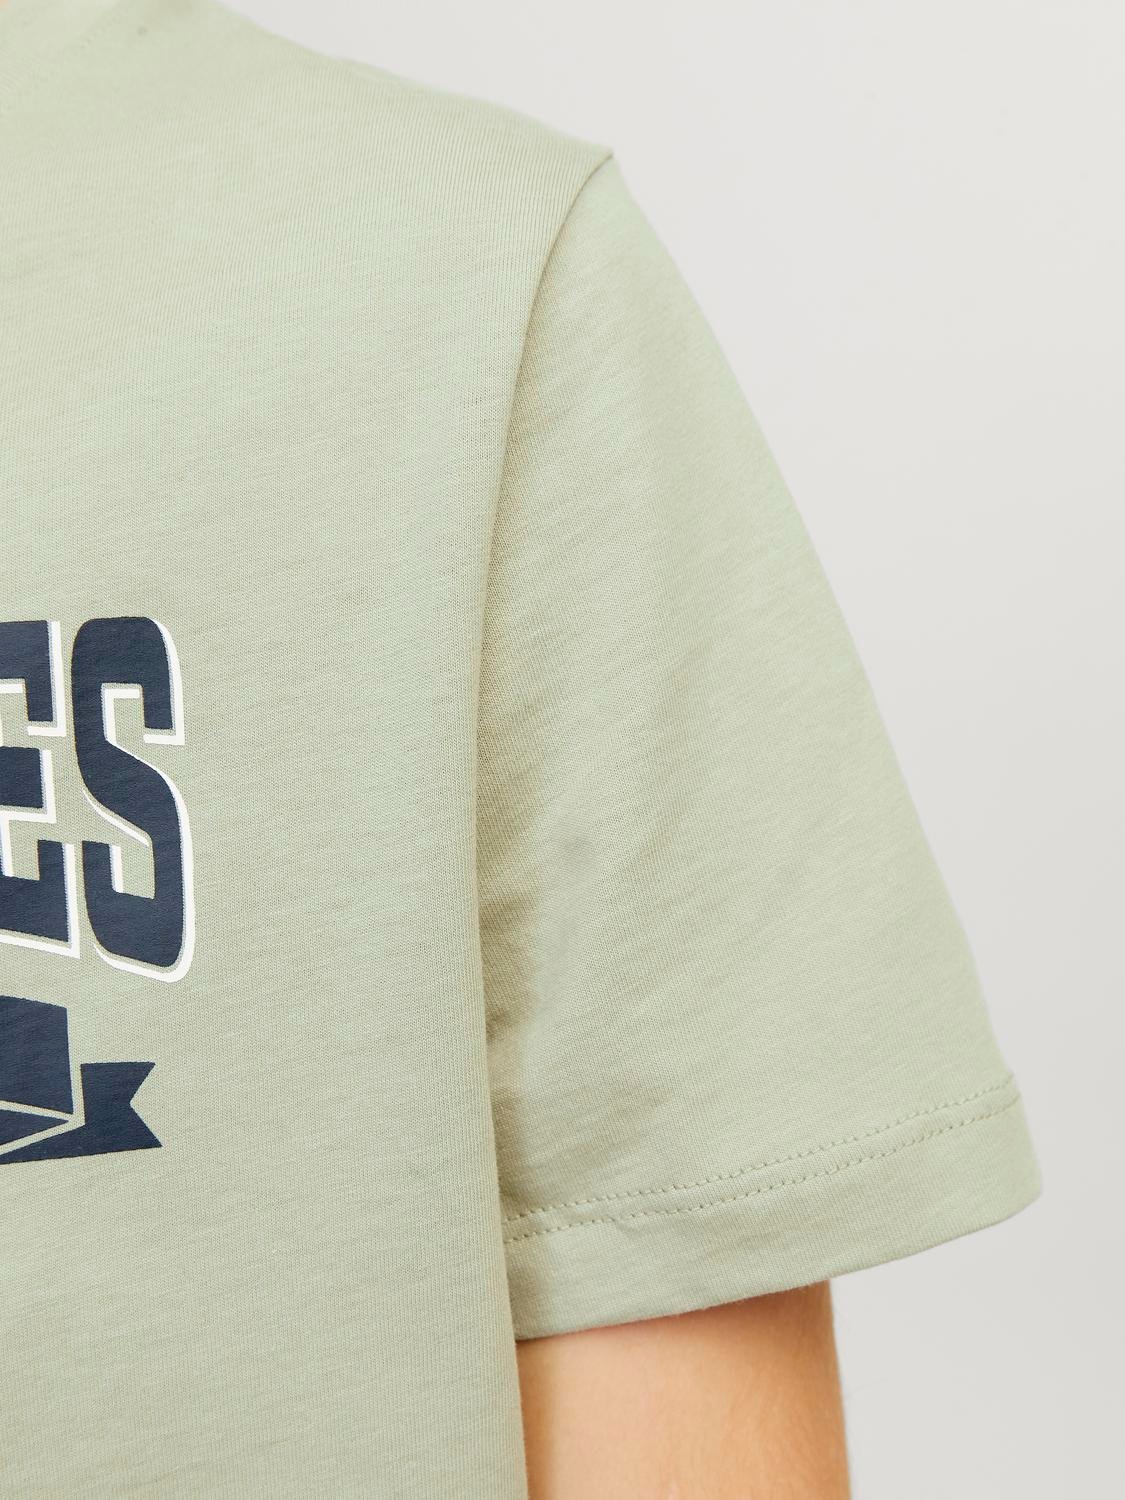 Jack & Jones Printet T-shirt Mini -Desert Sage - 12257379